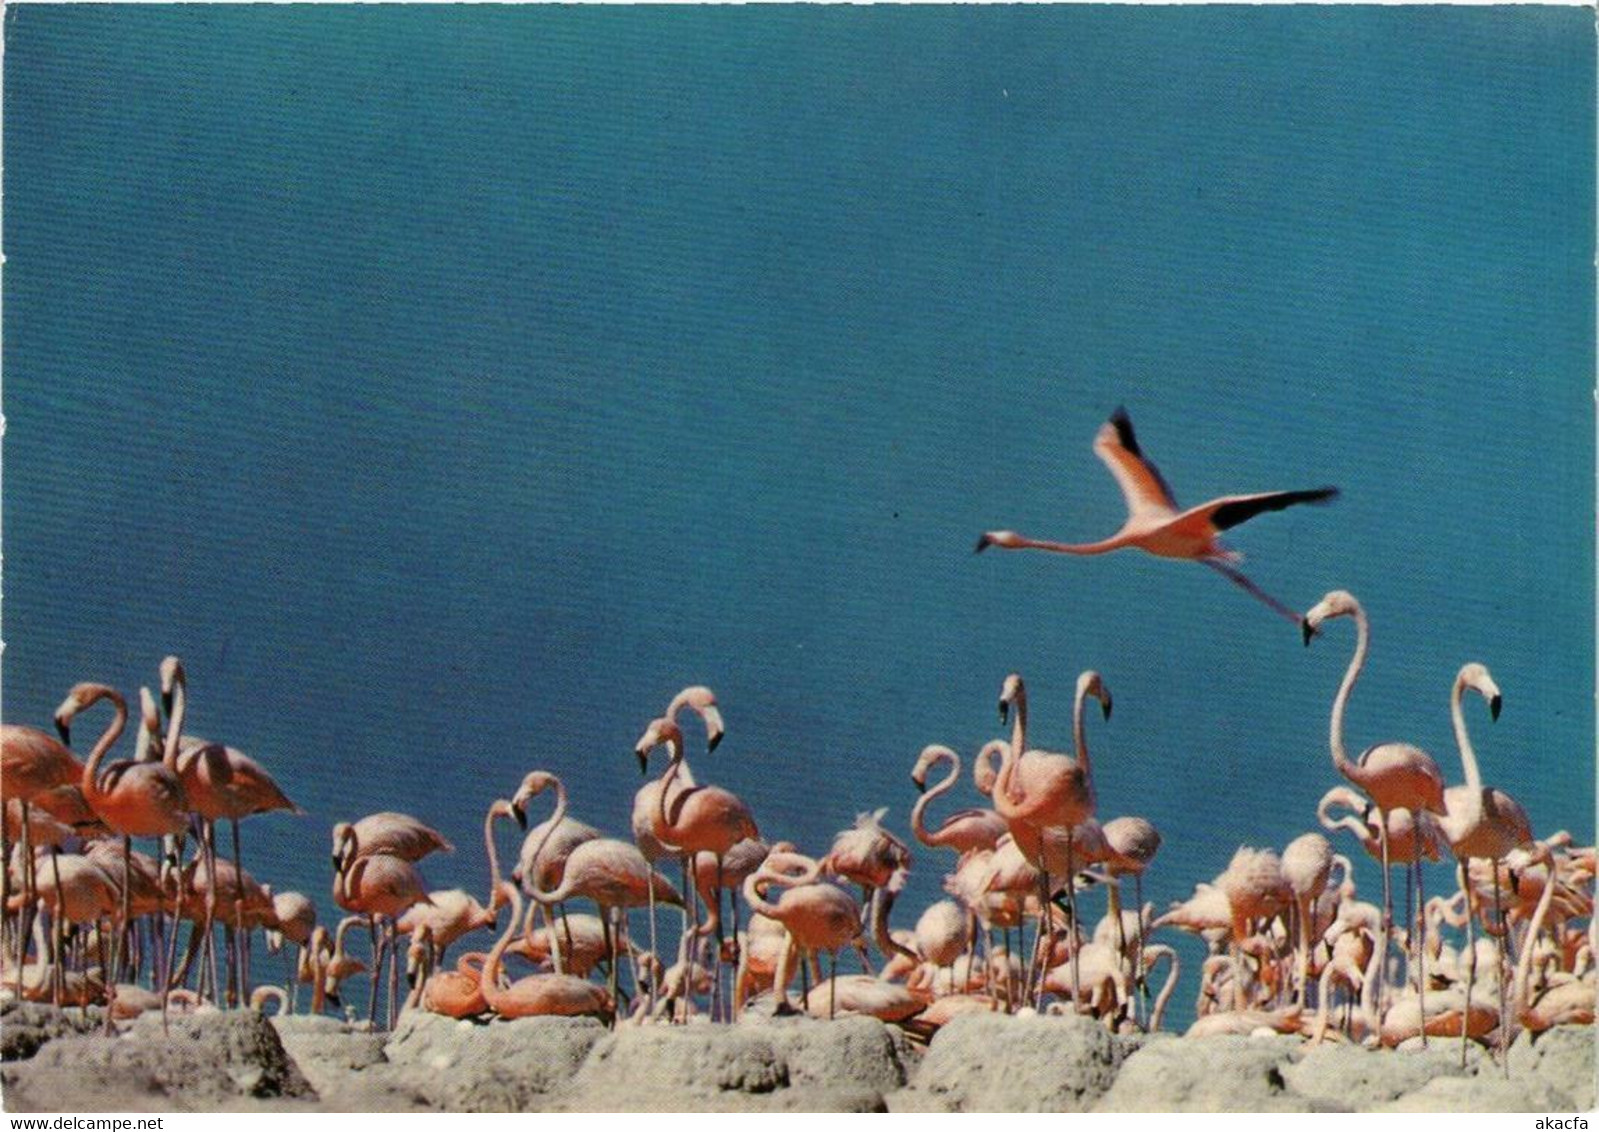 CPM AK Flamingo's At Their Nests One Egg Per Nest BONAIRE (750234) - Bonaire